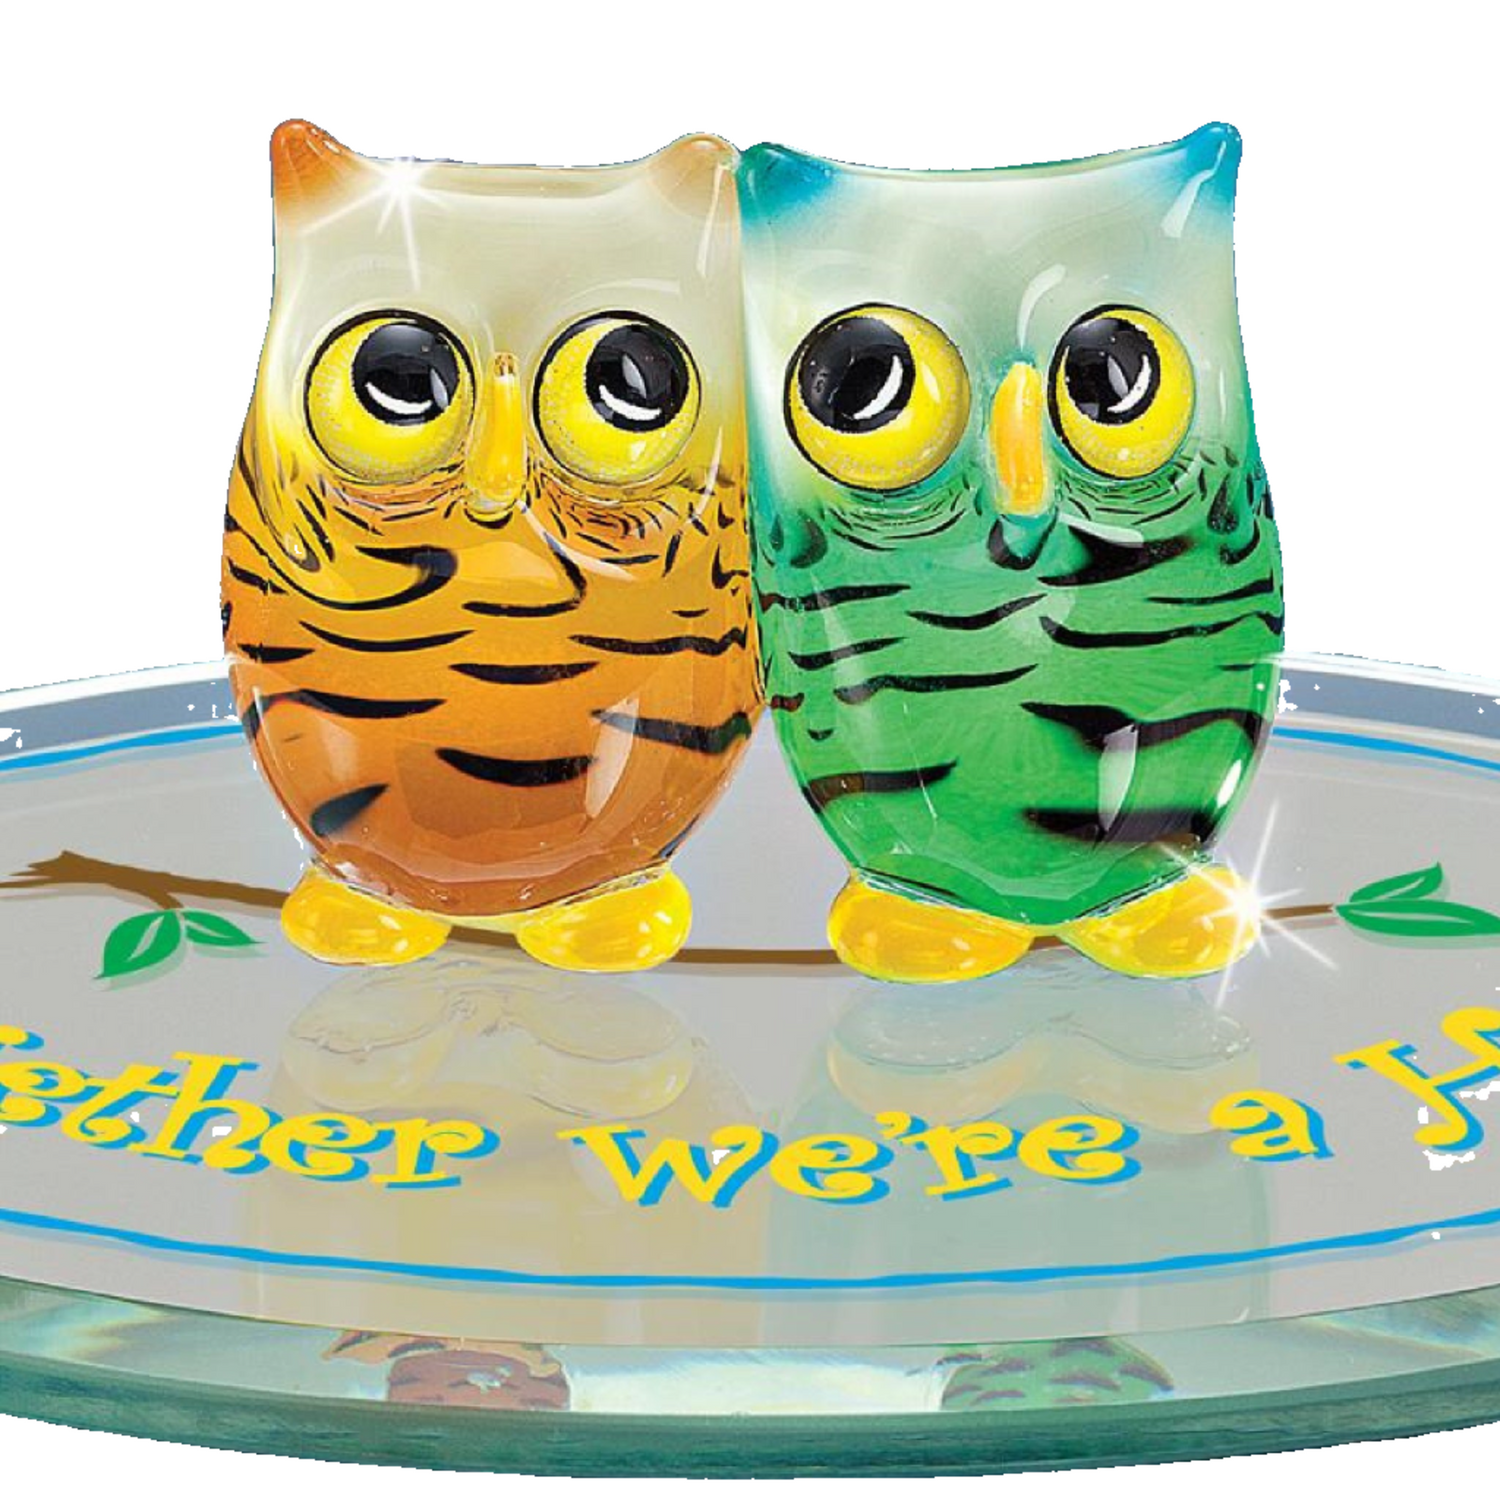 Glass Baron "Together We're A Hoot" Owl Friendship Figurine